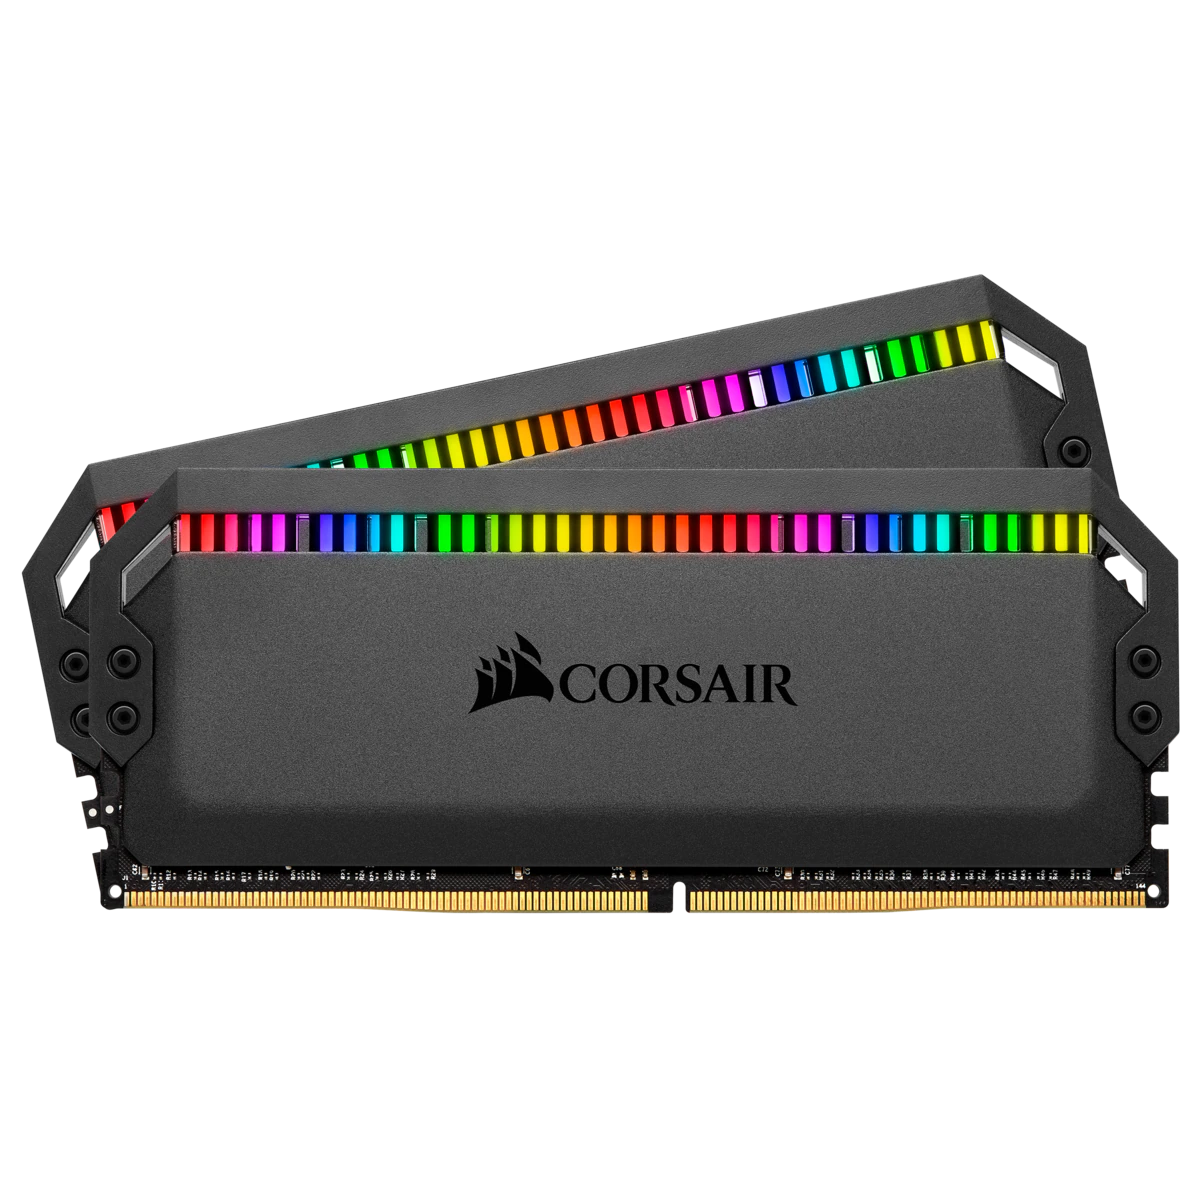 Corsair Dominator Platinum RGB 64GB DDR4 3600MHz SDRAM (2 x 32GB) Memory Kit